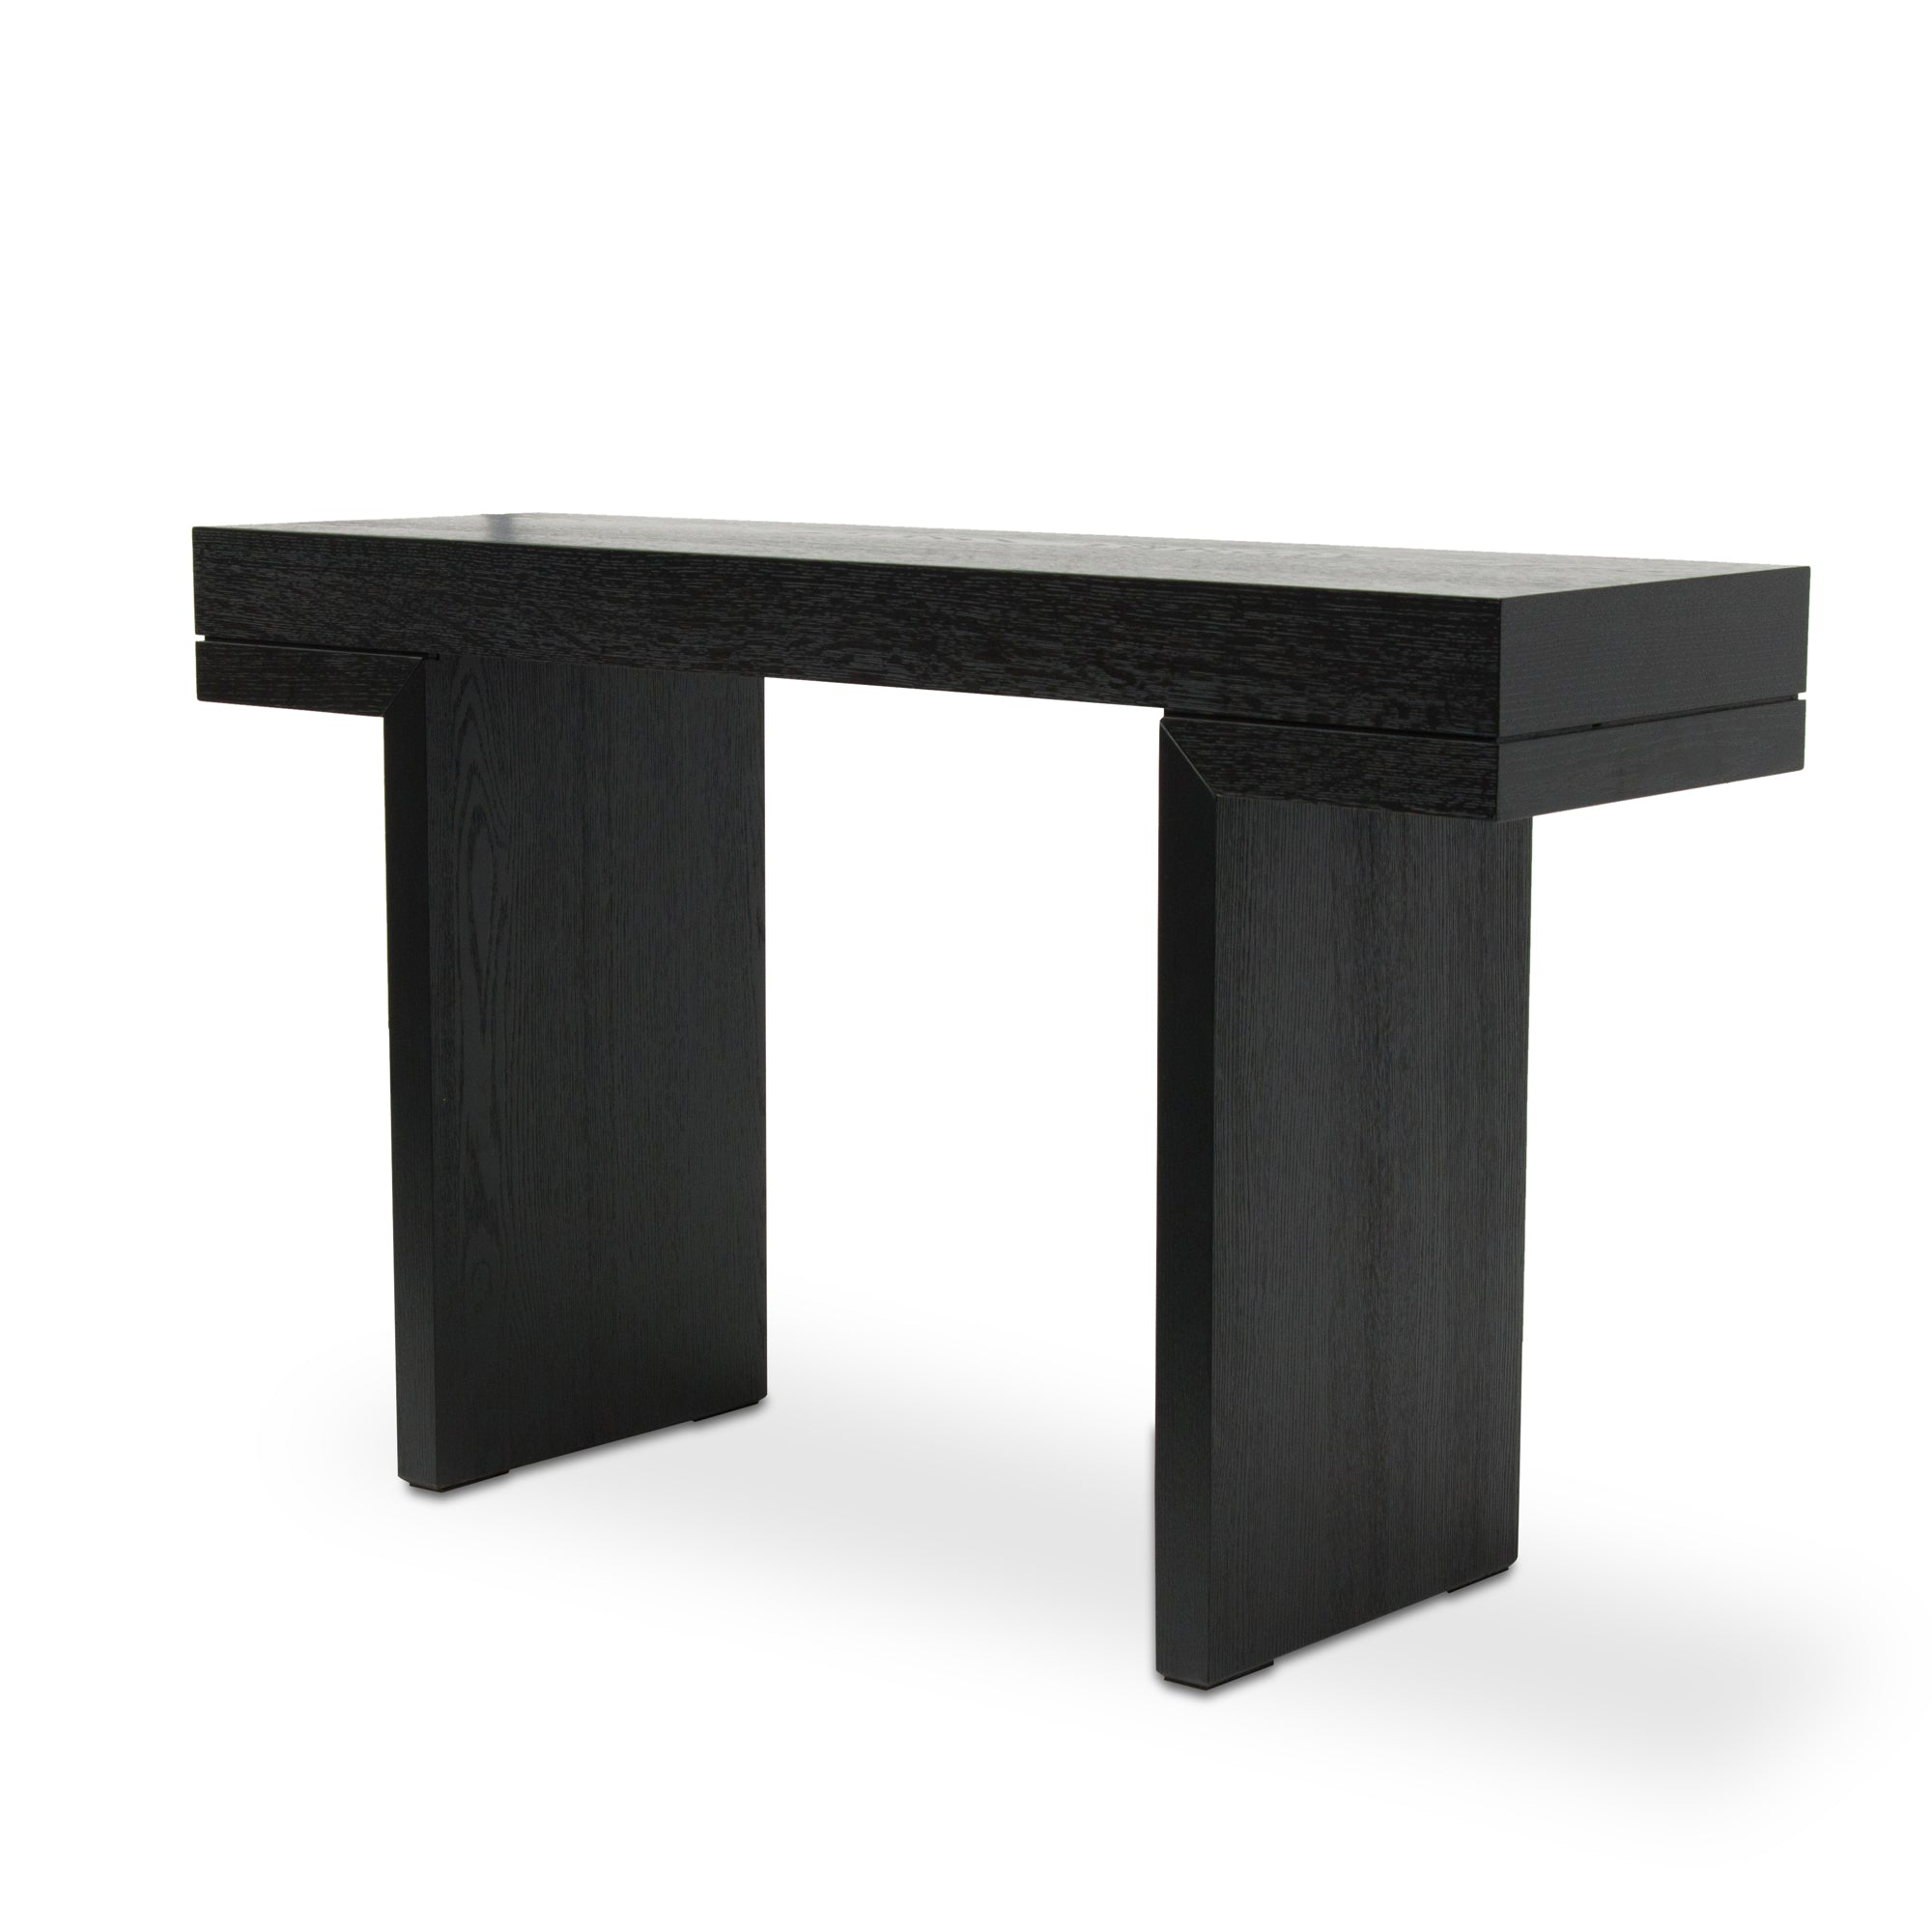 Micah Console Table - Textured Espresso Black - Console